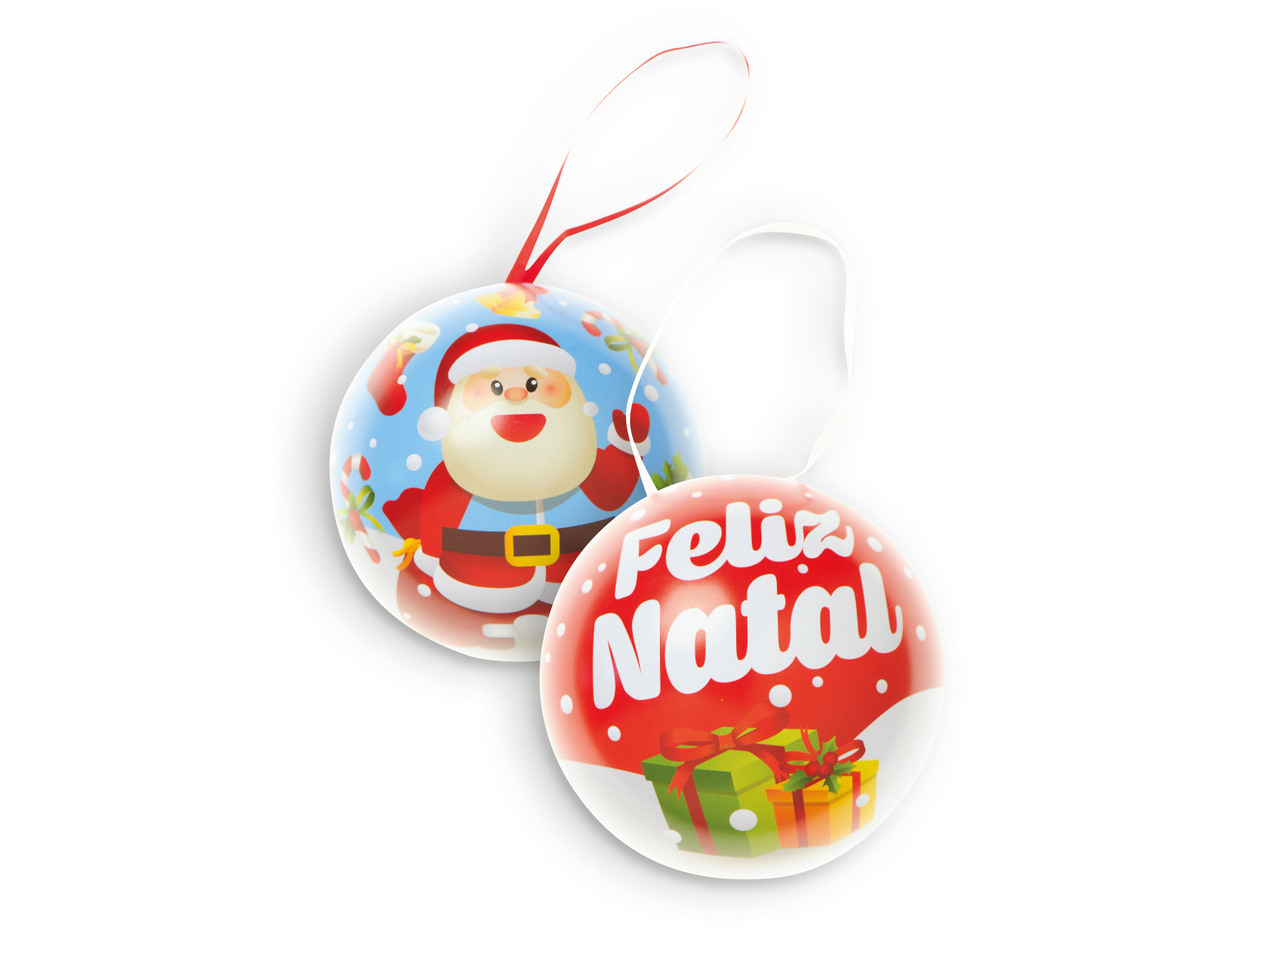 FAVORINA(R) Lata Decorativa de Natal com Bombons de Chocolate